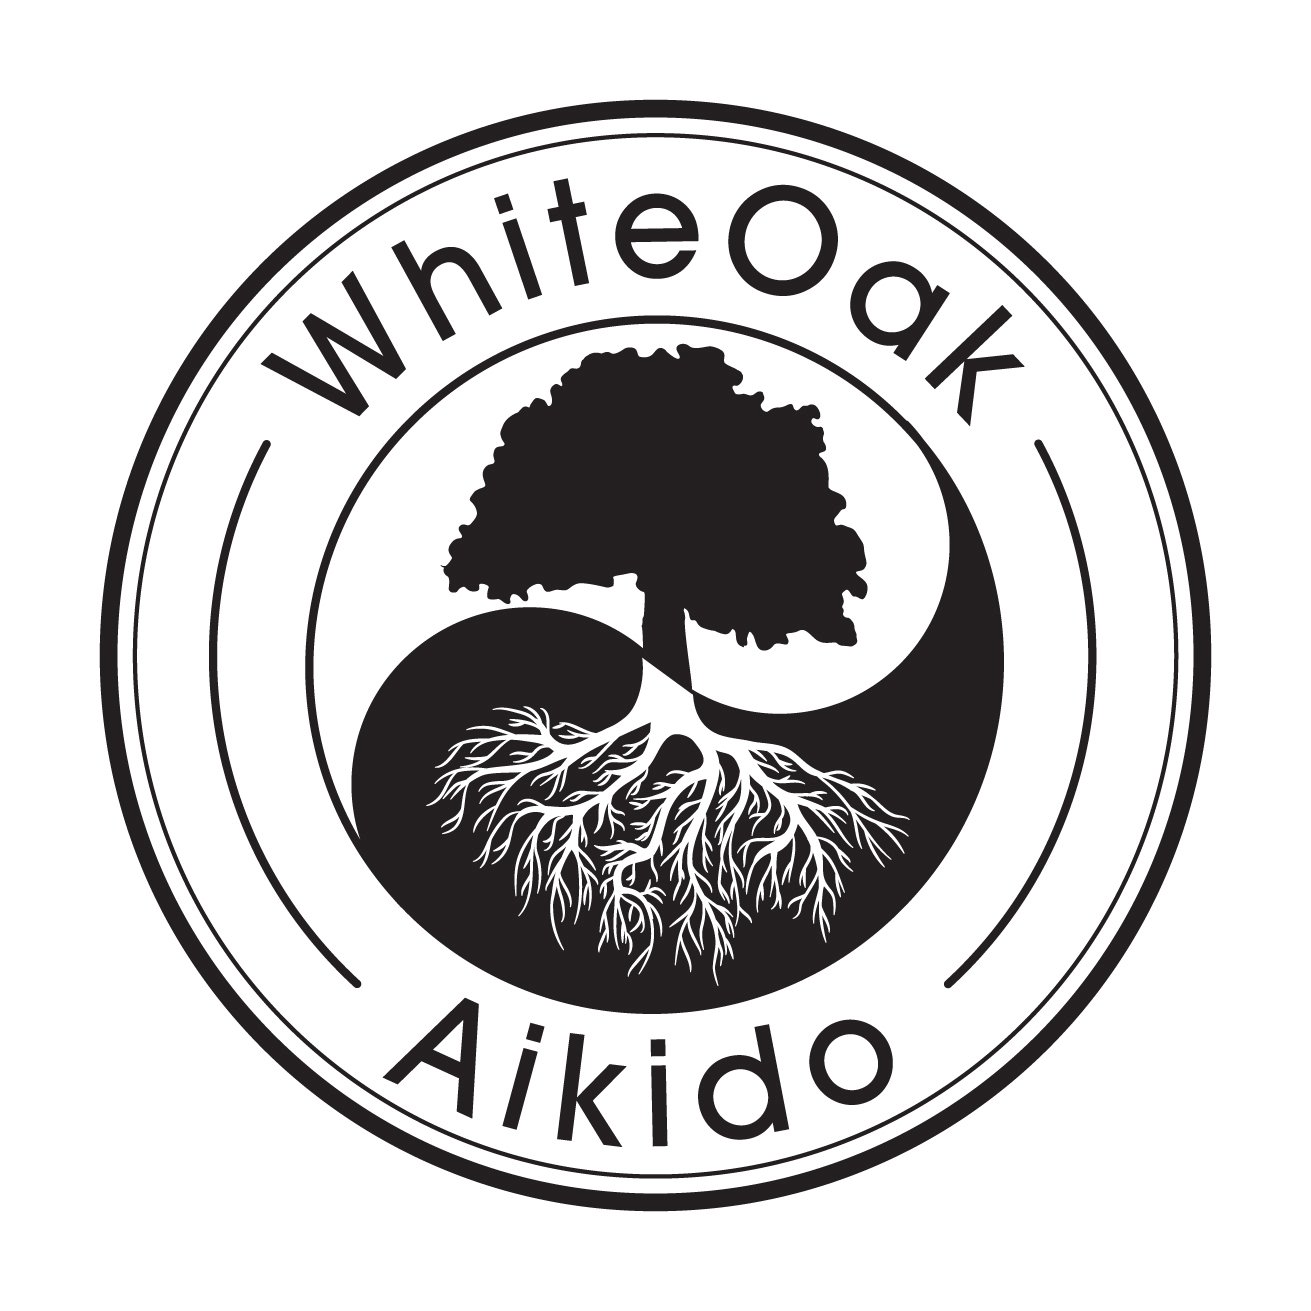 Aikido: White Oak Aikido Reading logo